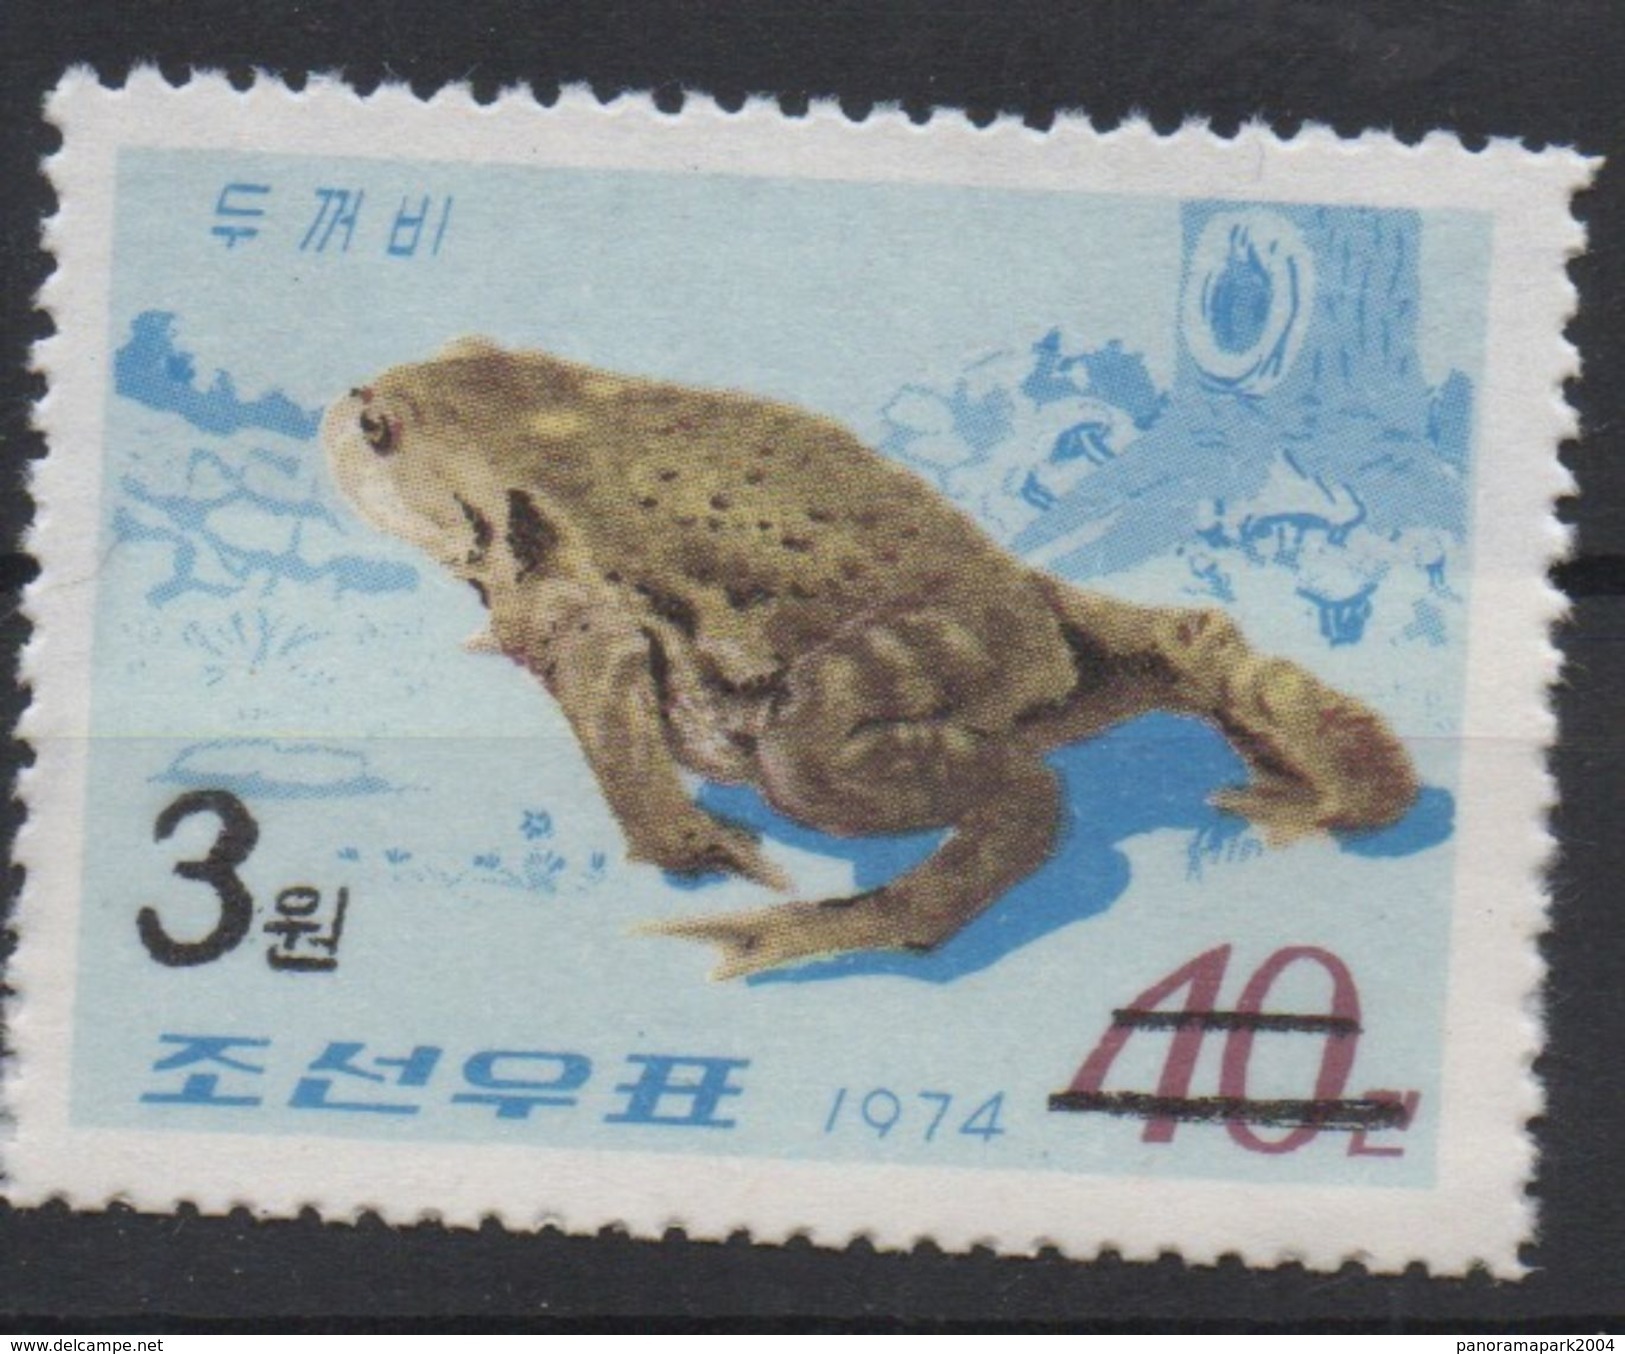 North Korea Corée Du Nord 2006 Mi. 5032 Surchargé Überdruck OVERPRINT Faune Fauna Grenouille Frog Frosch MNH** RARE - Grenouilles